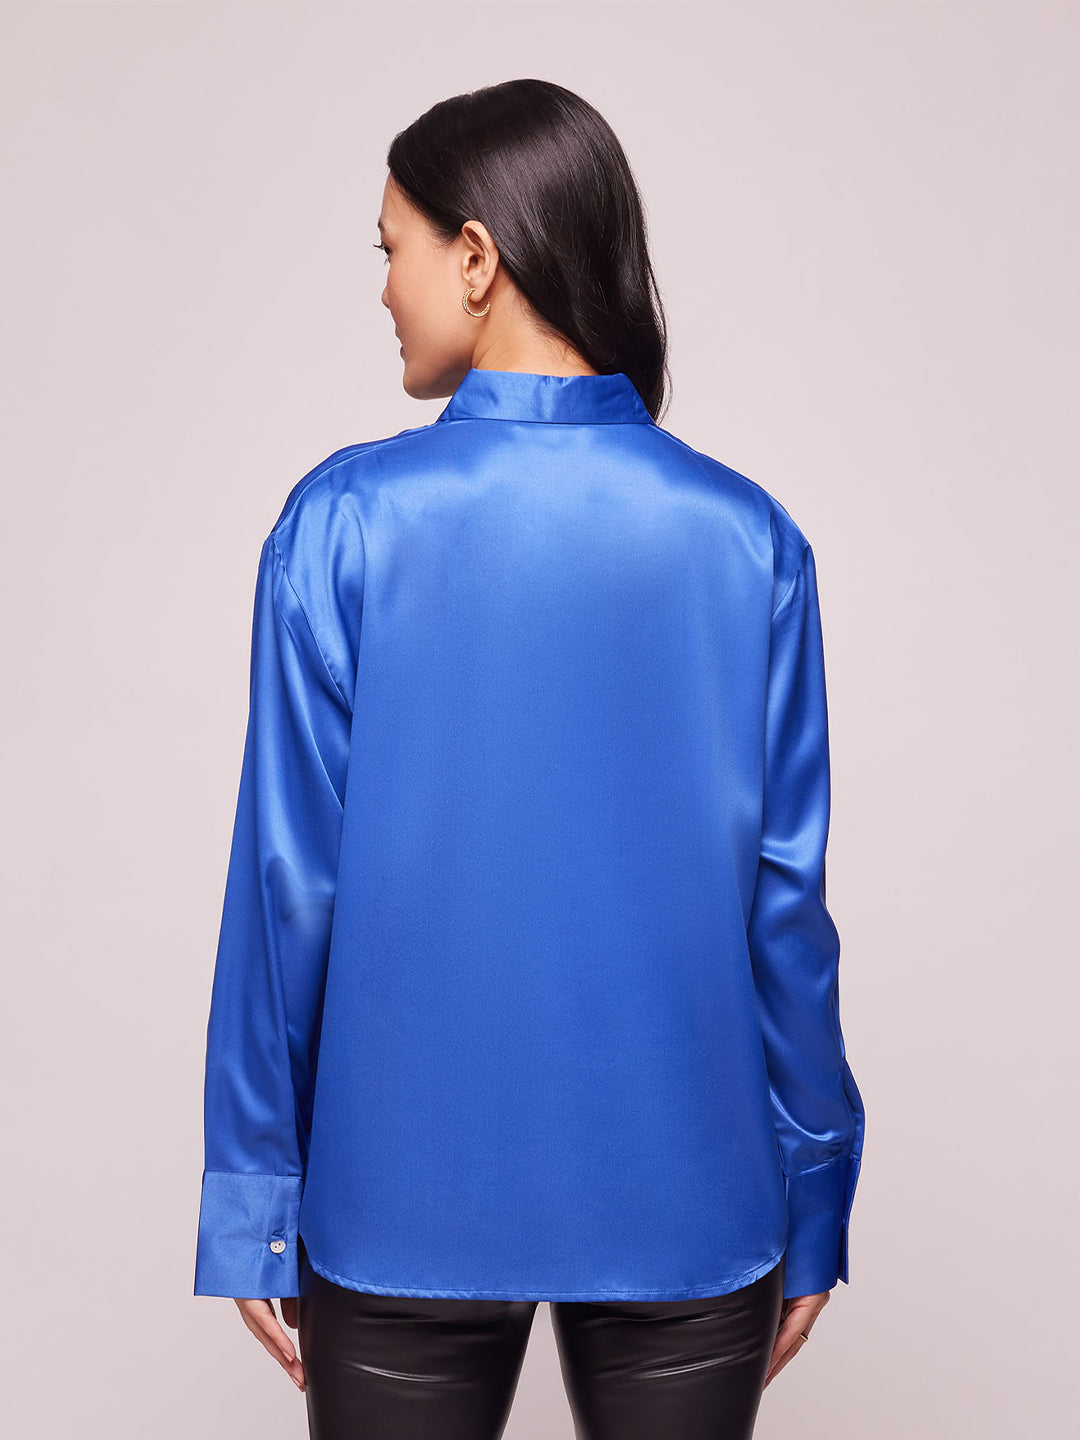 Bombay High Women's Royal Blue Solid Satin Shirt